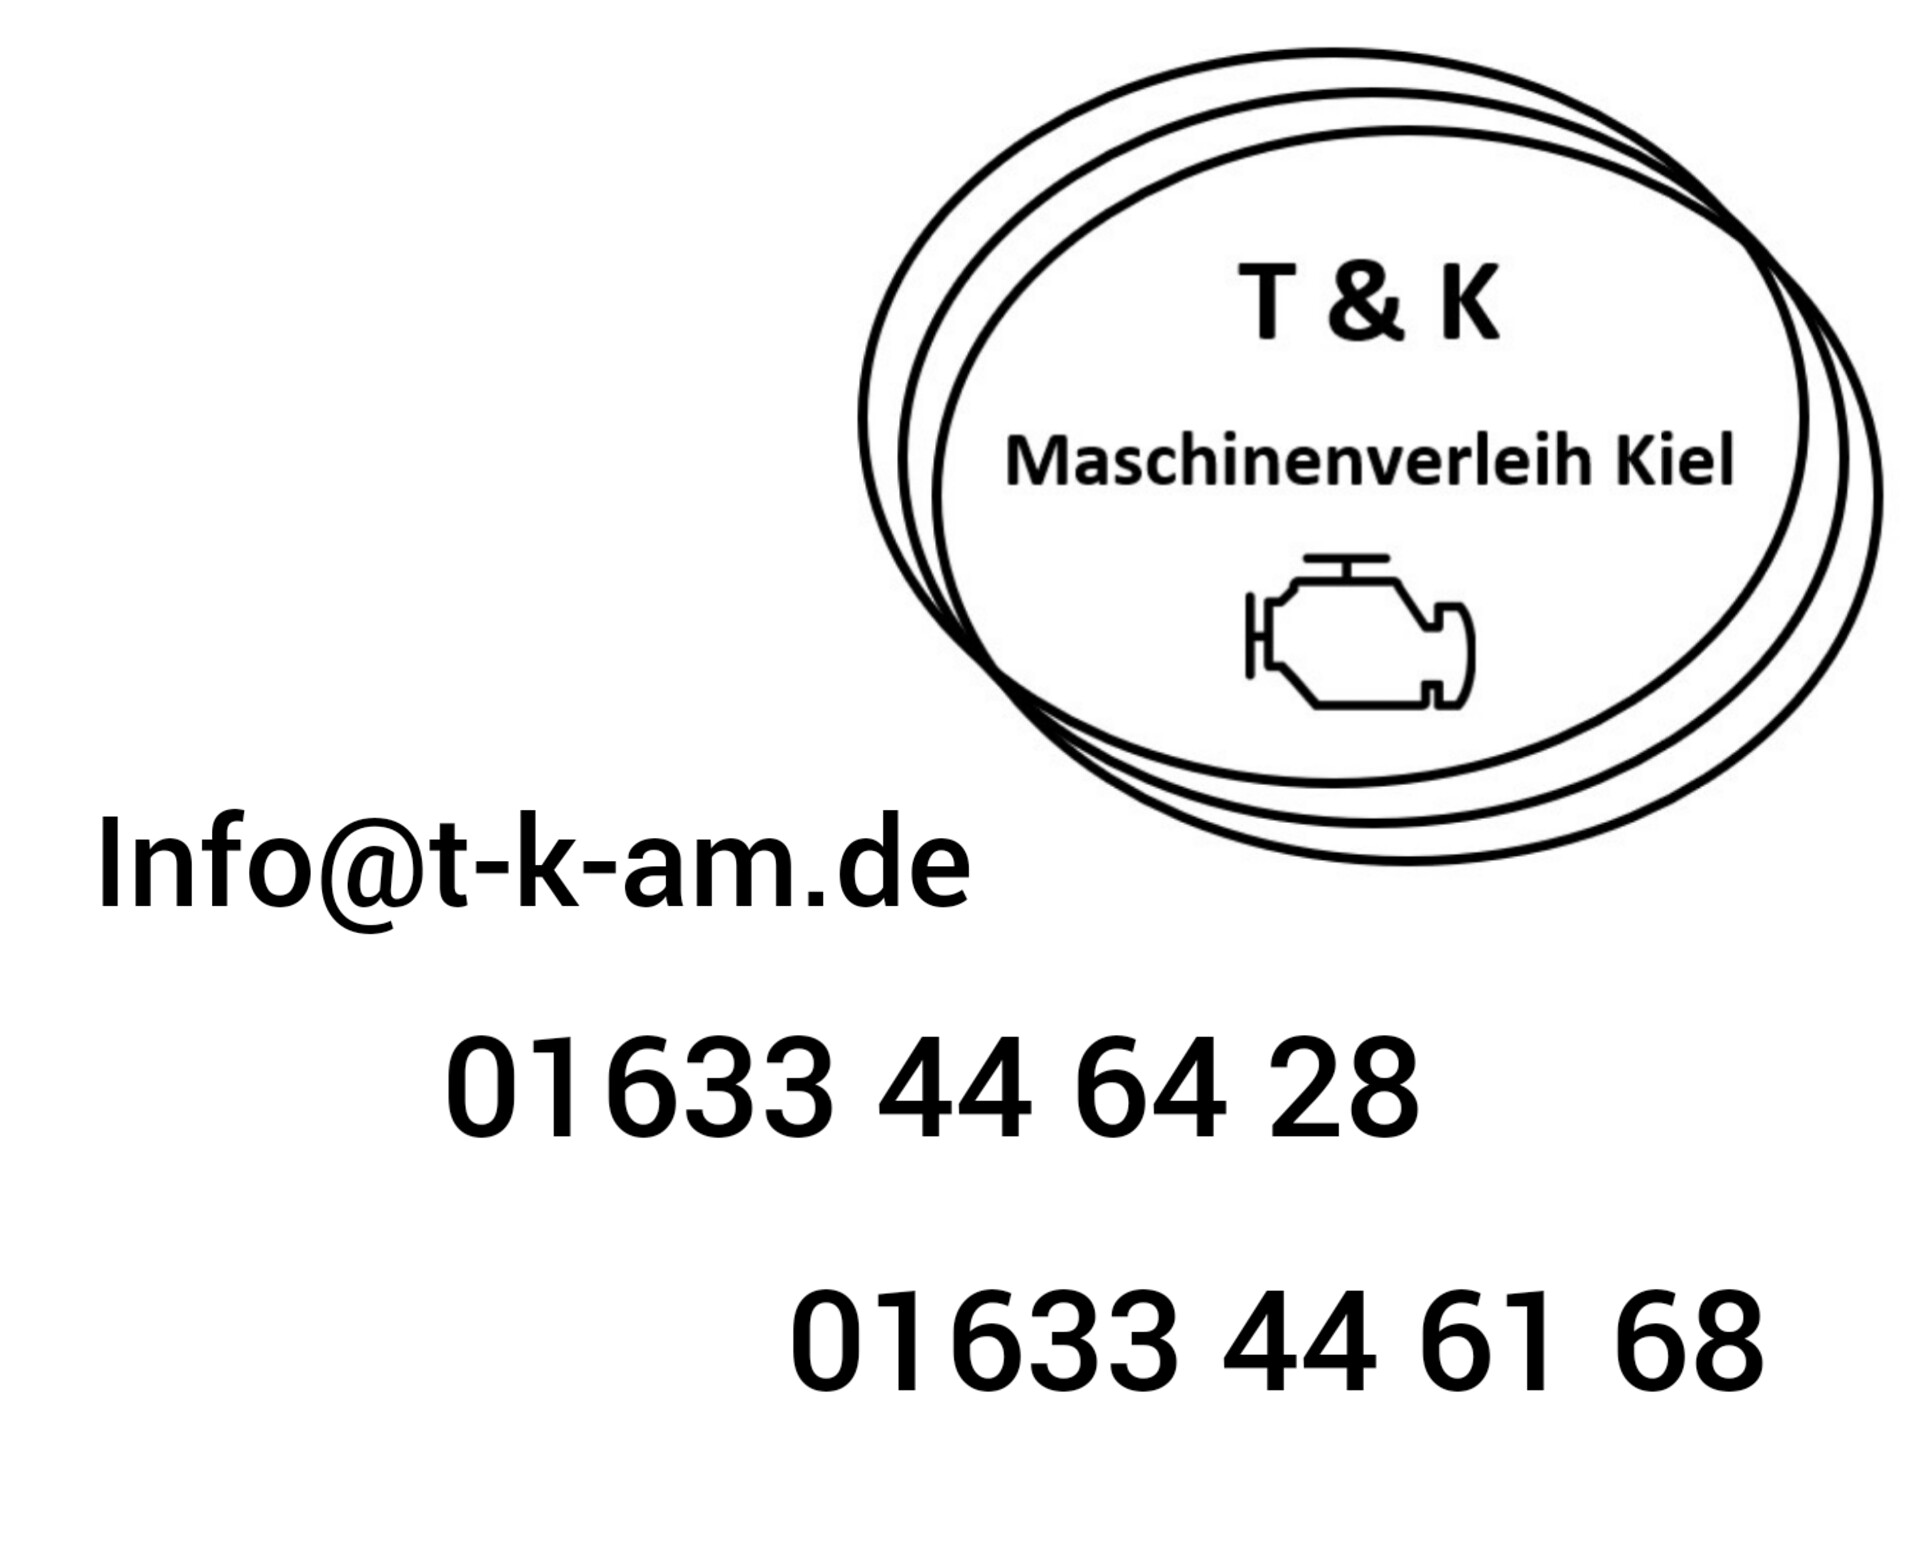 T & K Maschinenverleih Kiel in Kiel